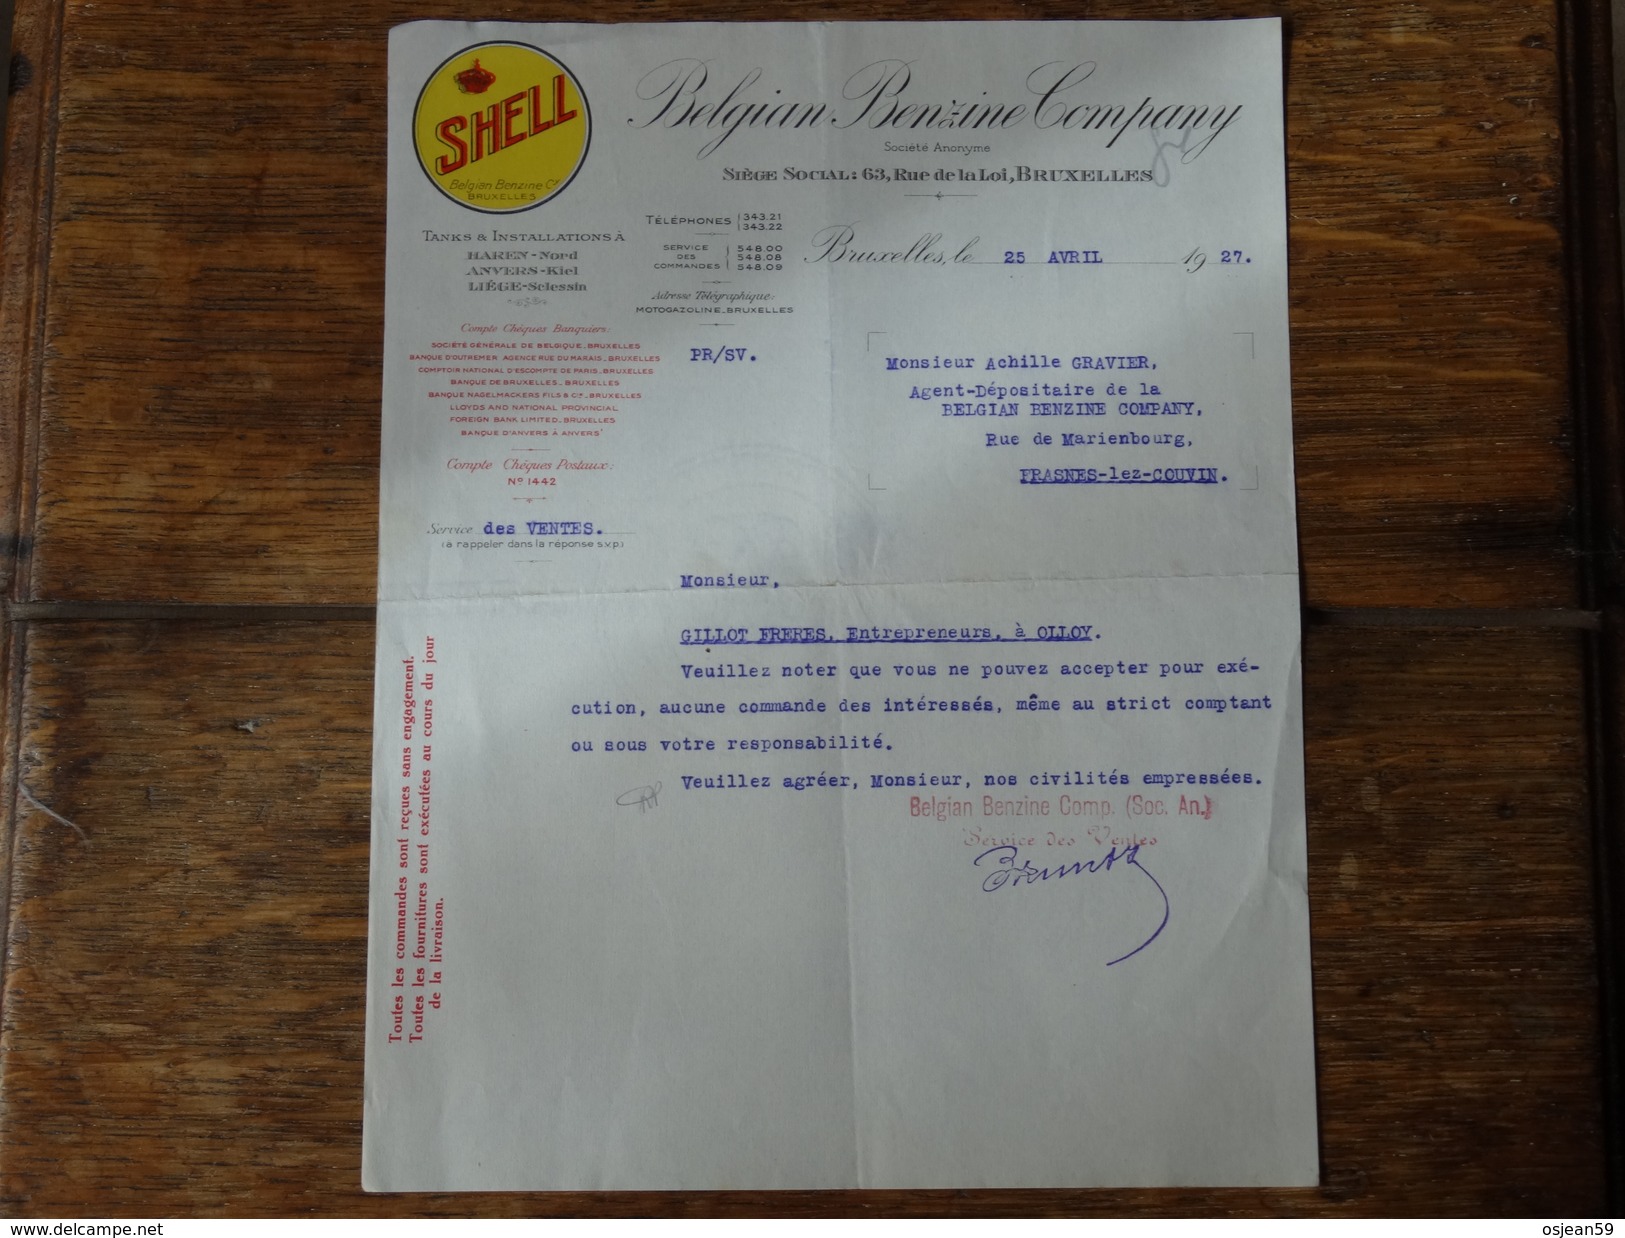 SHELL-Belgian Benzine Company - Courier Du 25 Avril 1927. - Auto's